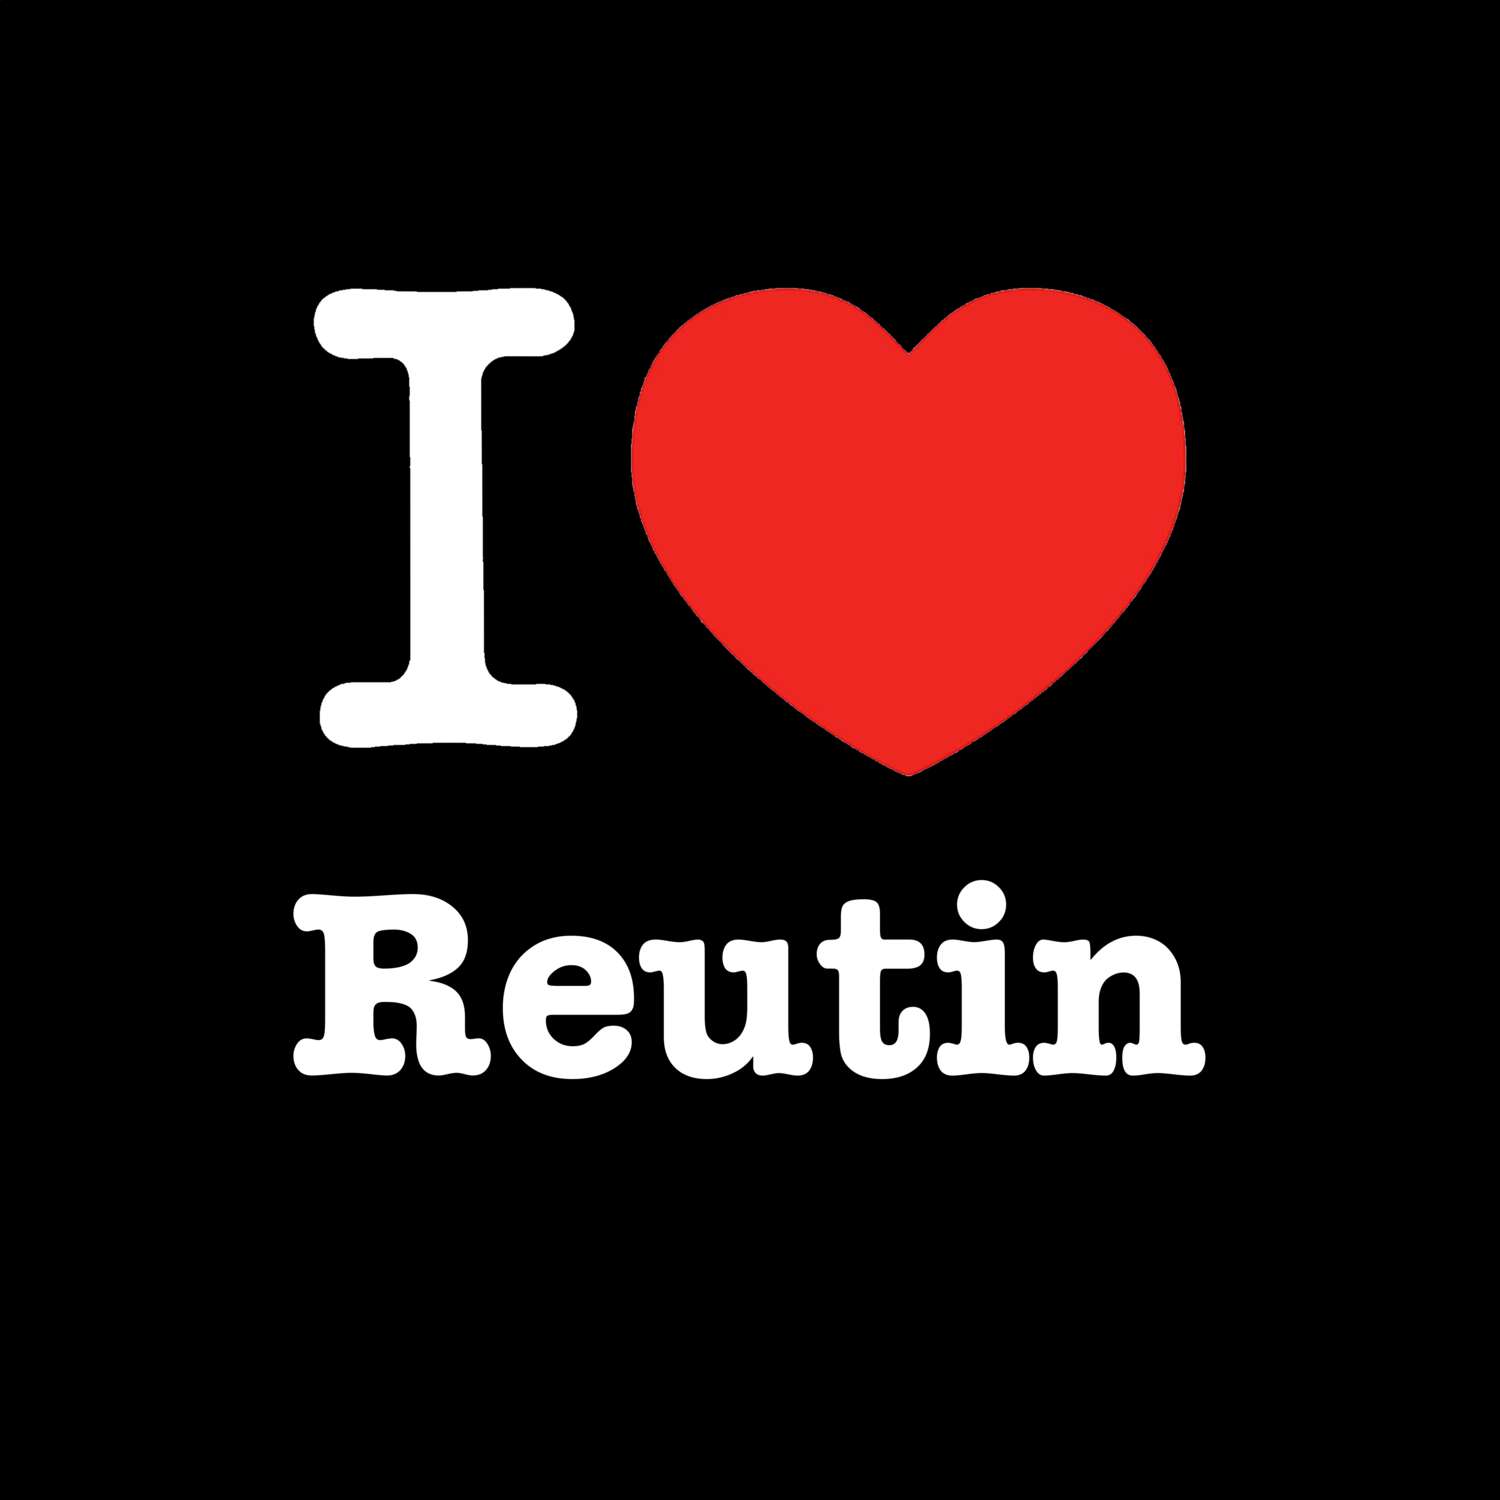 Reutin T-Shirt »I love«